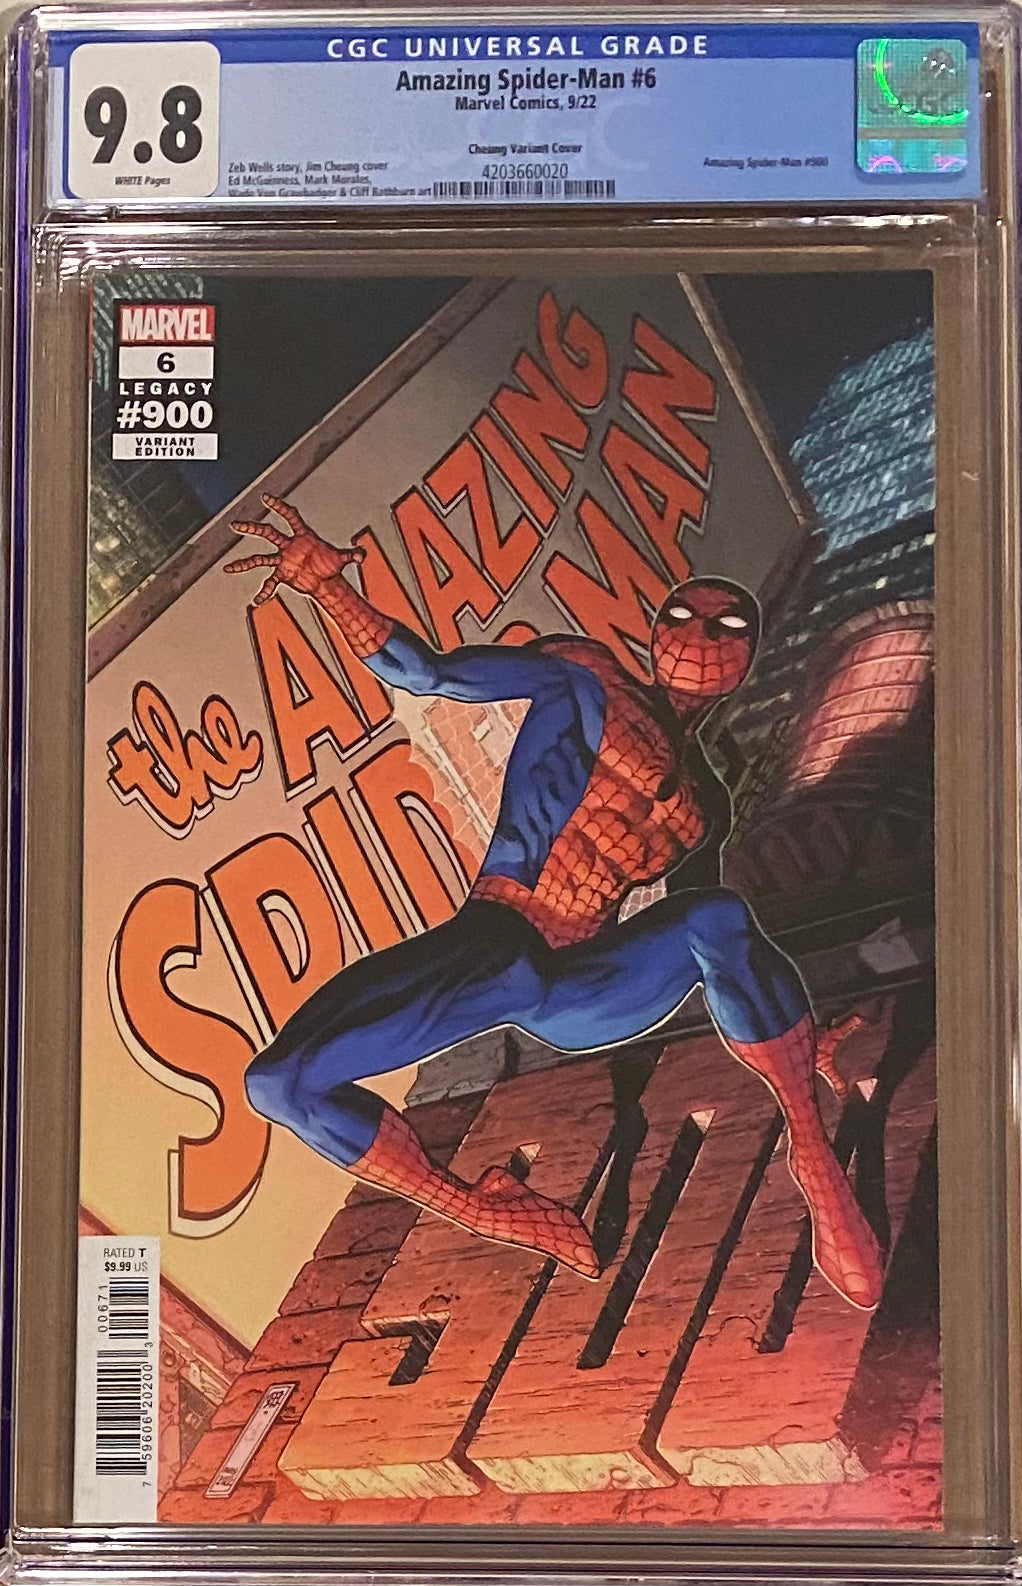 Amazing Spider-Man #6 (#900) Cheung 1:50 Retailer Incentive Variant CGC 9.8